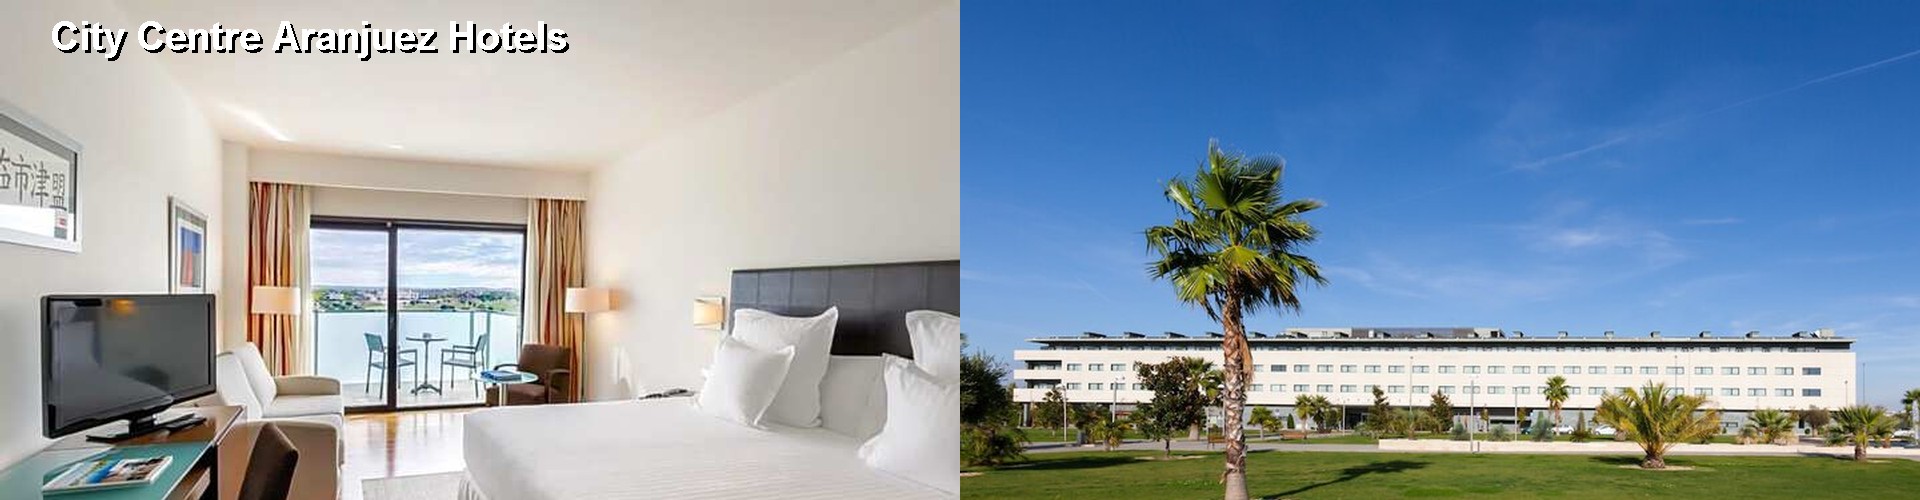 5 Best Hotels near City Centre Aranjuez